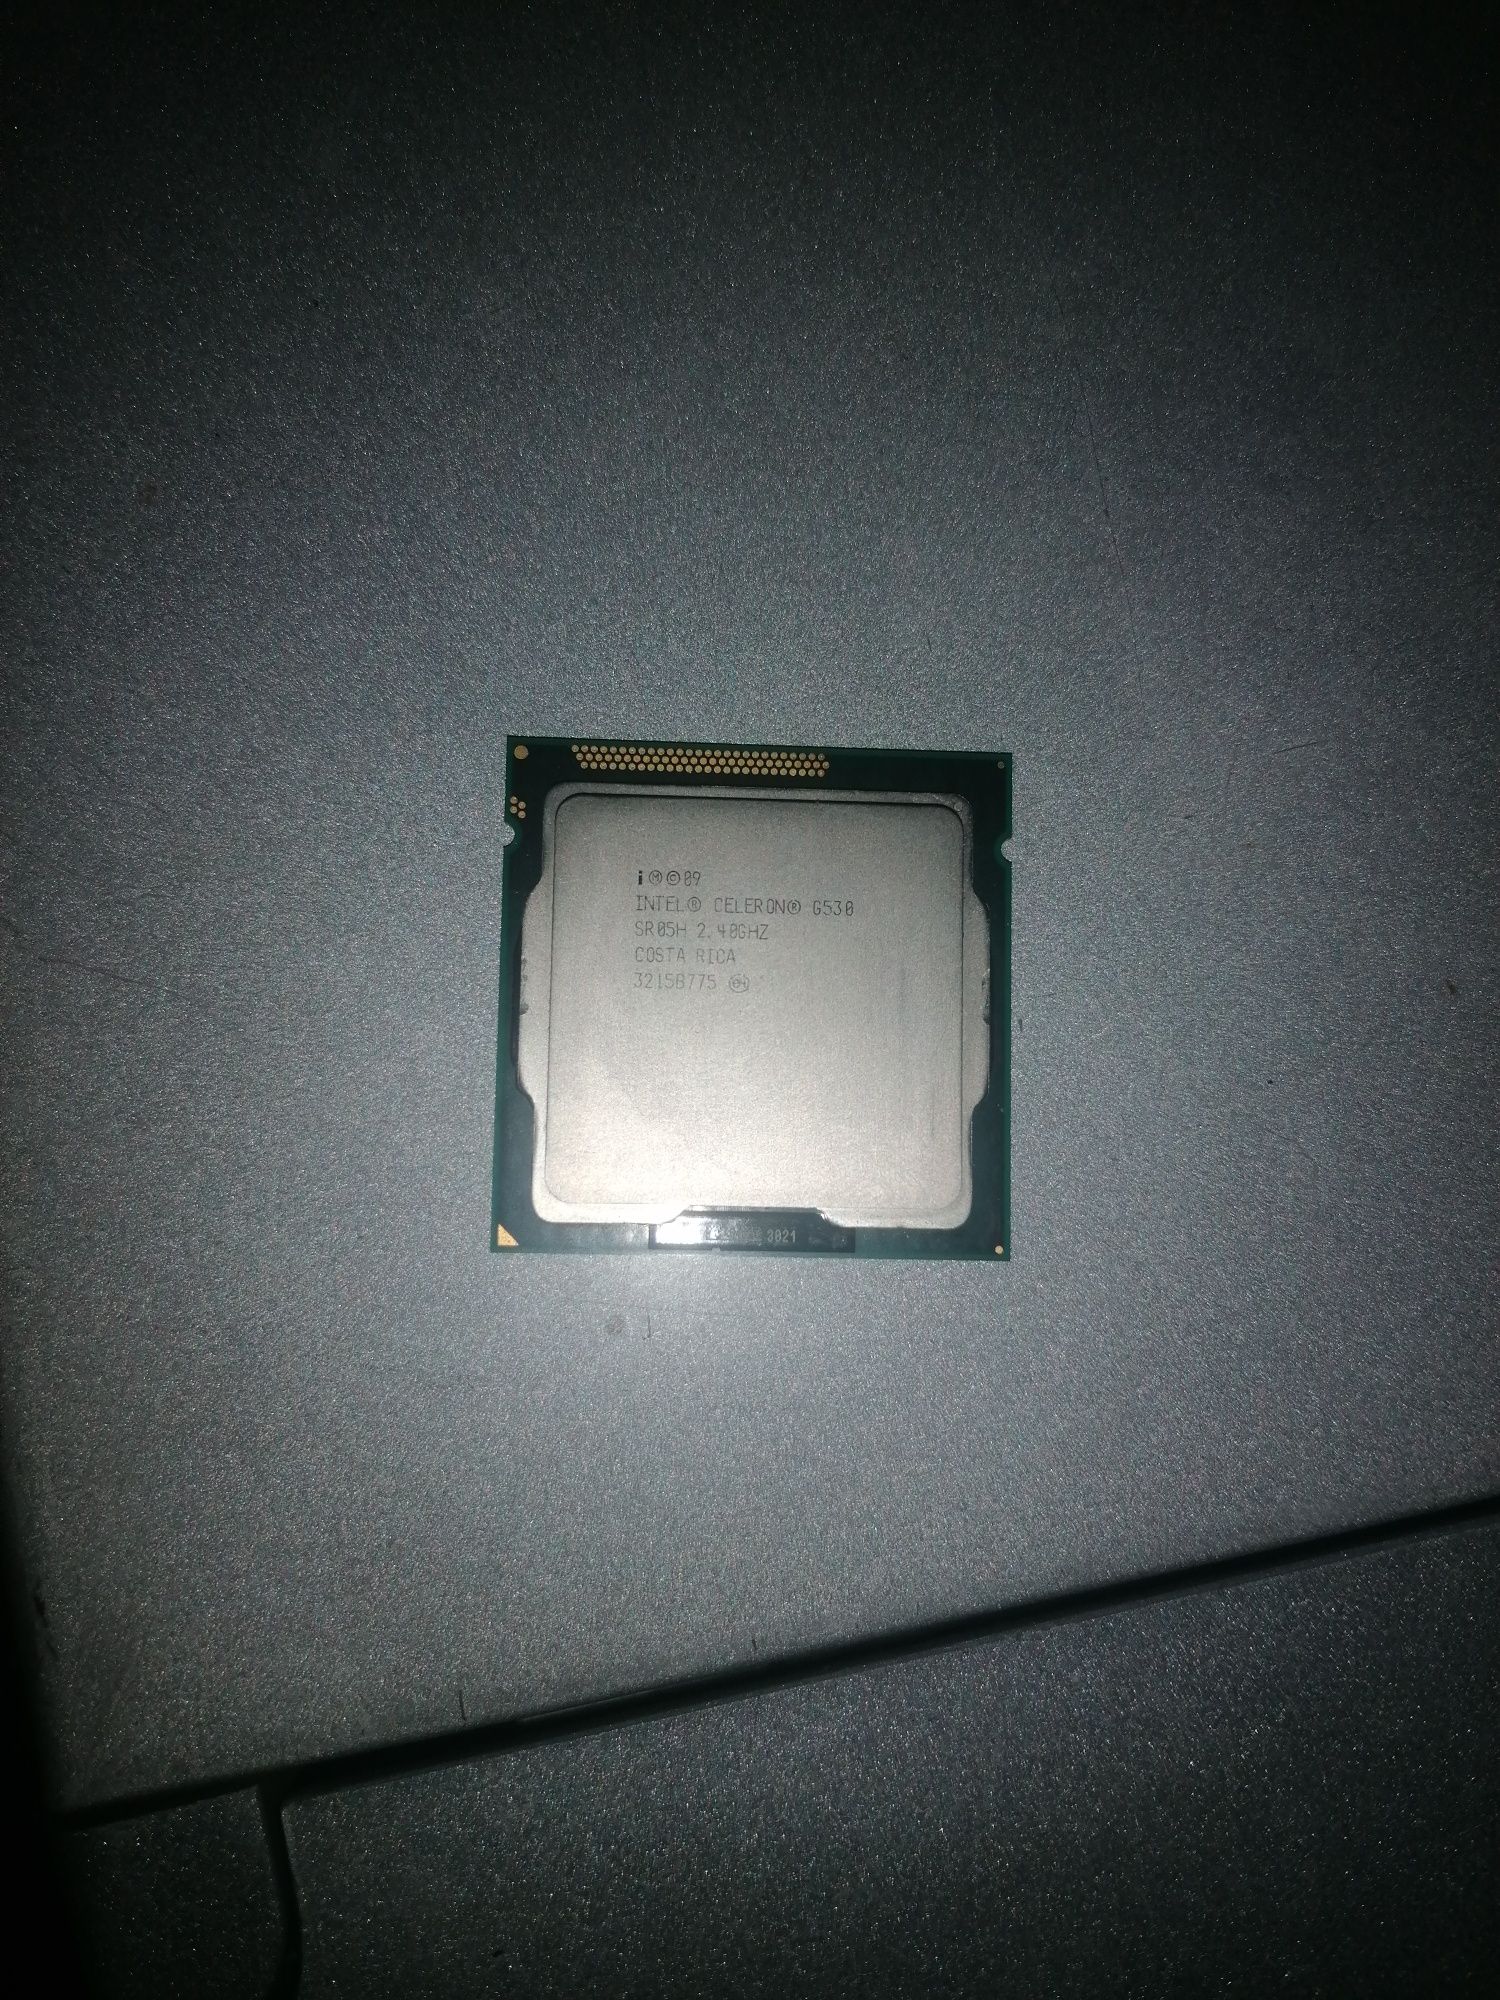 Procesor Intel G530 2,4 GHz stoket 1150